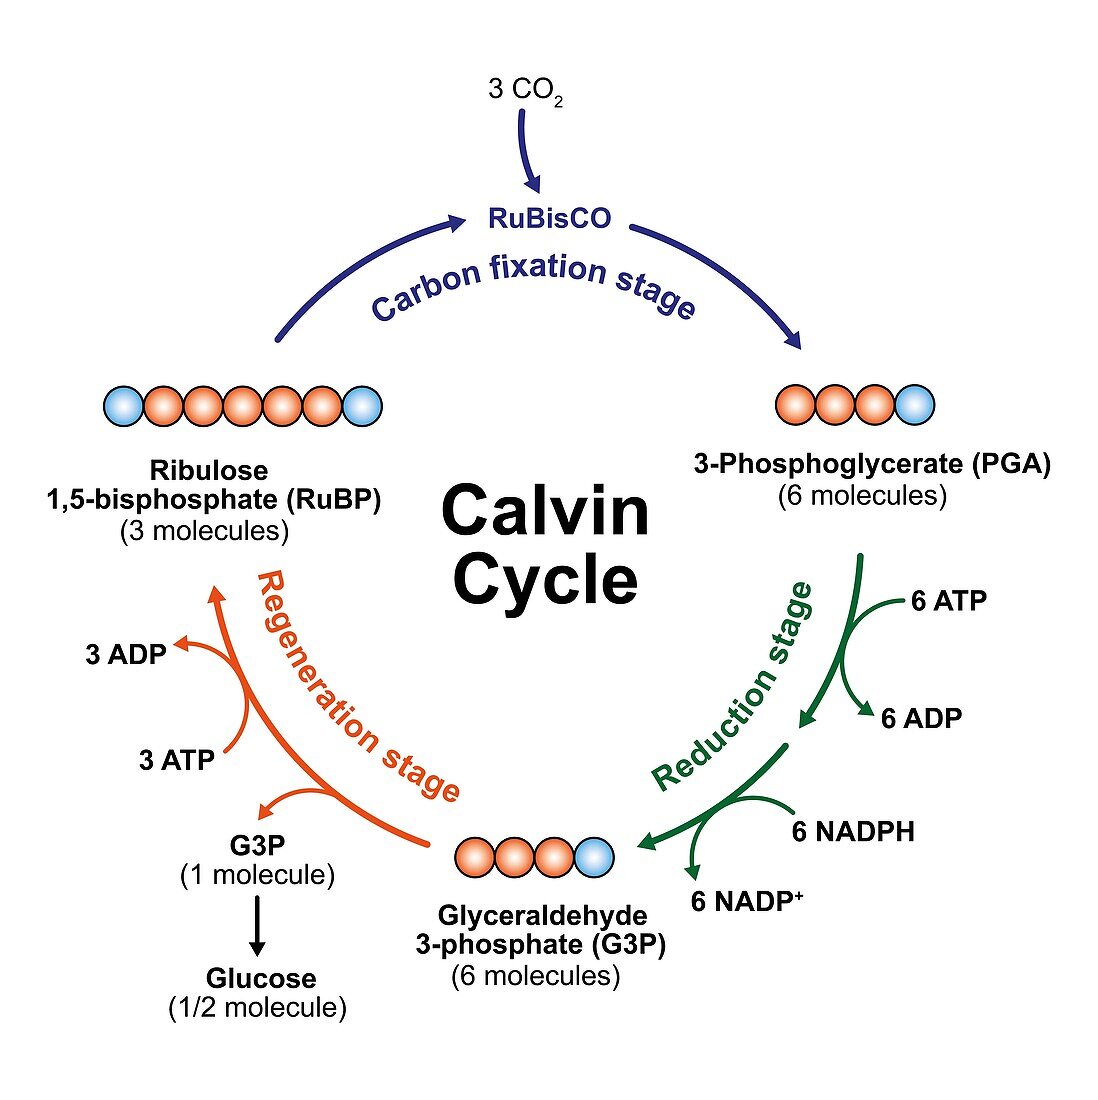 Calvin cycle, illustration